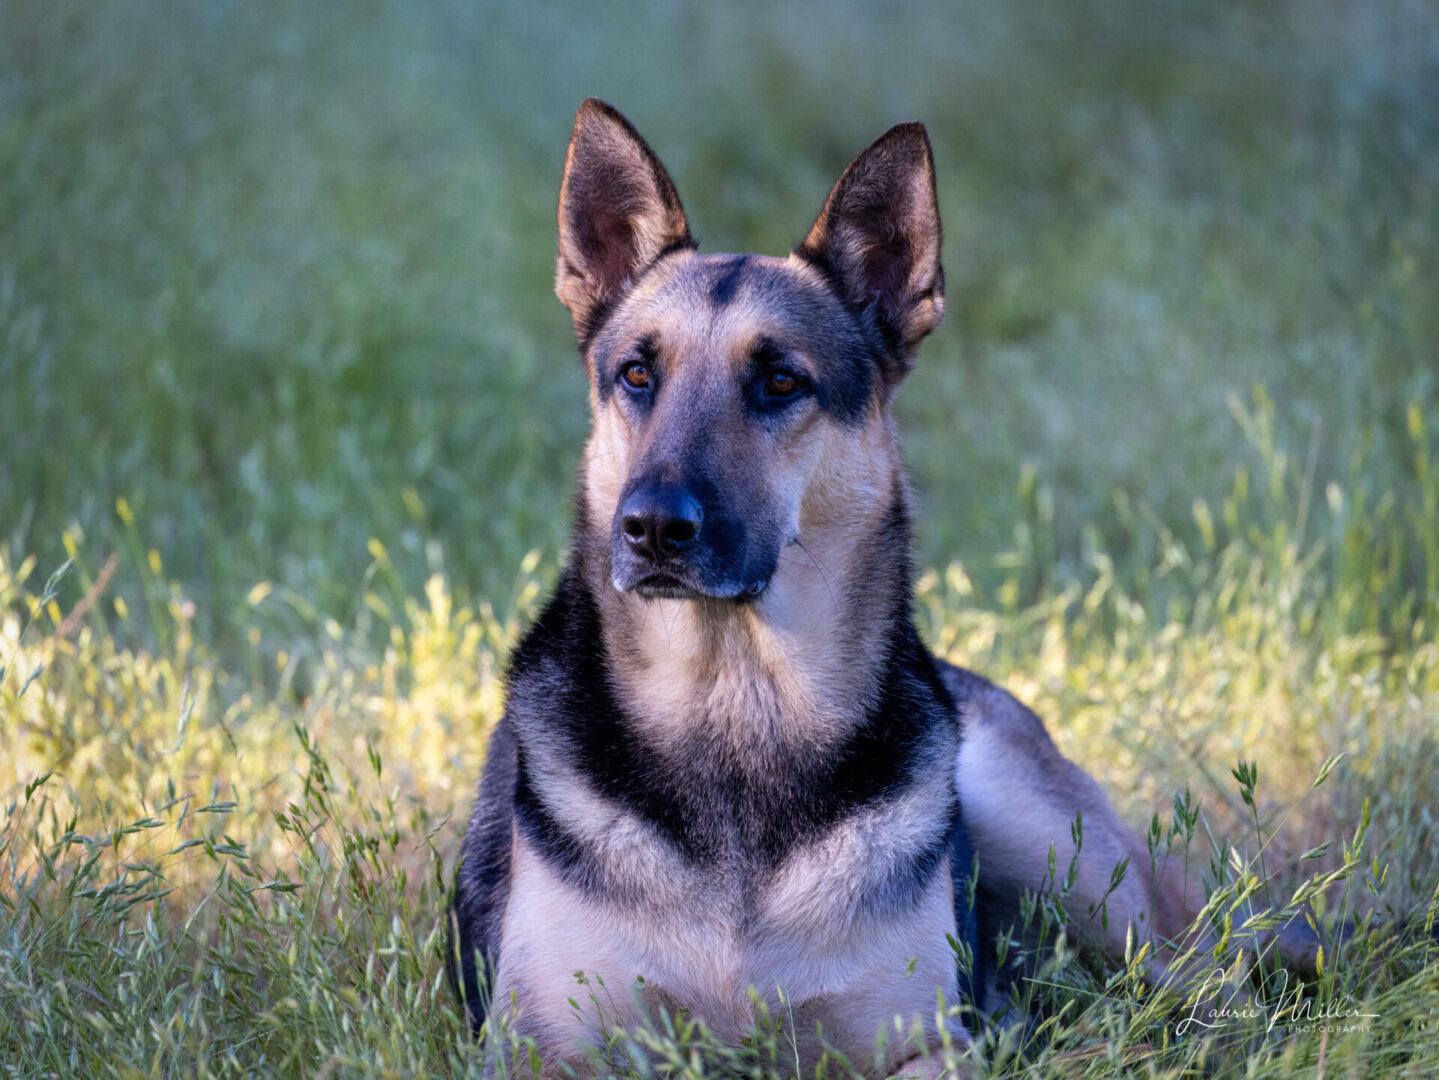 A German Shepherd dog in tall grass.